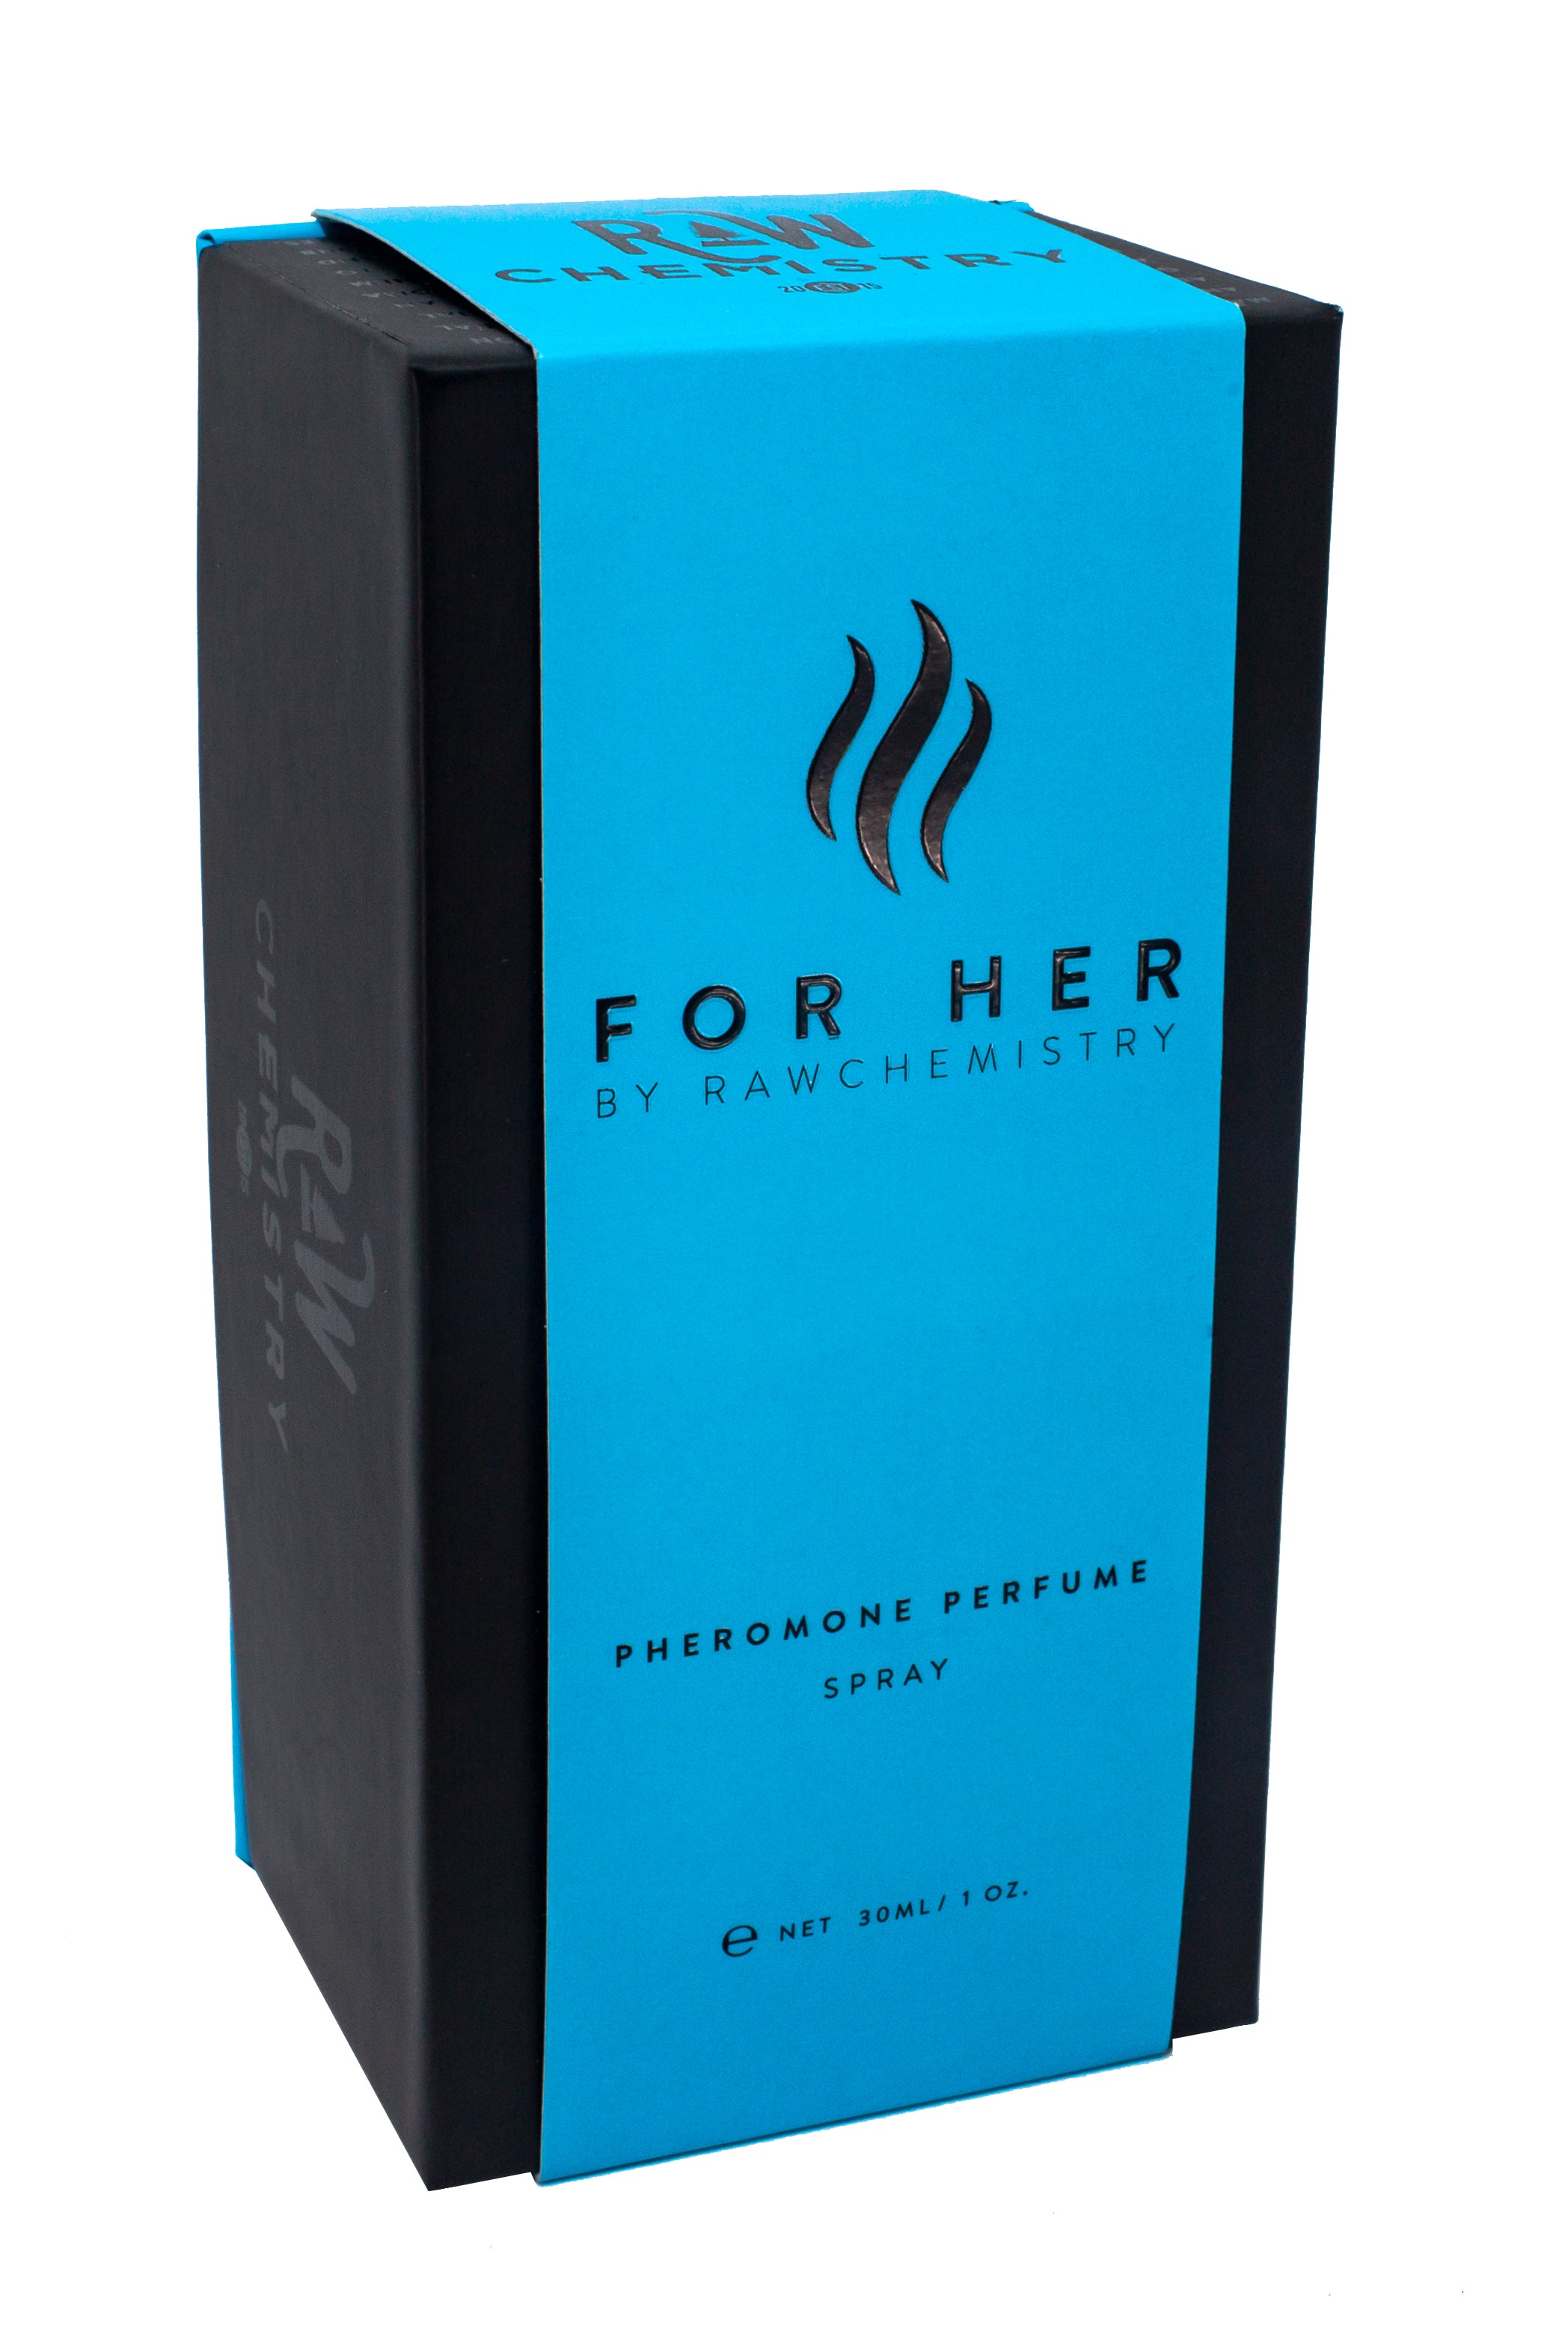 For Her by RawChemistry - A Pheromone Perfume